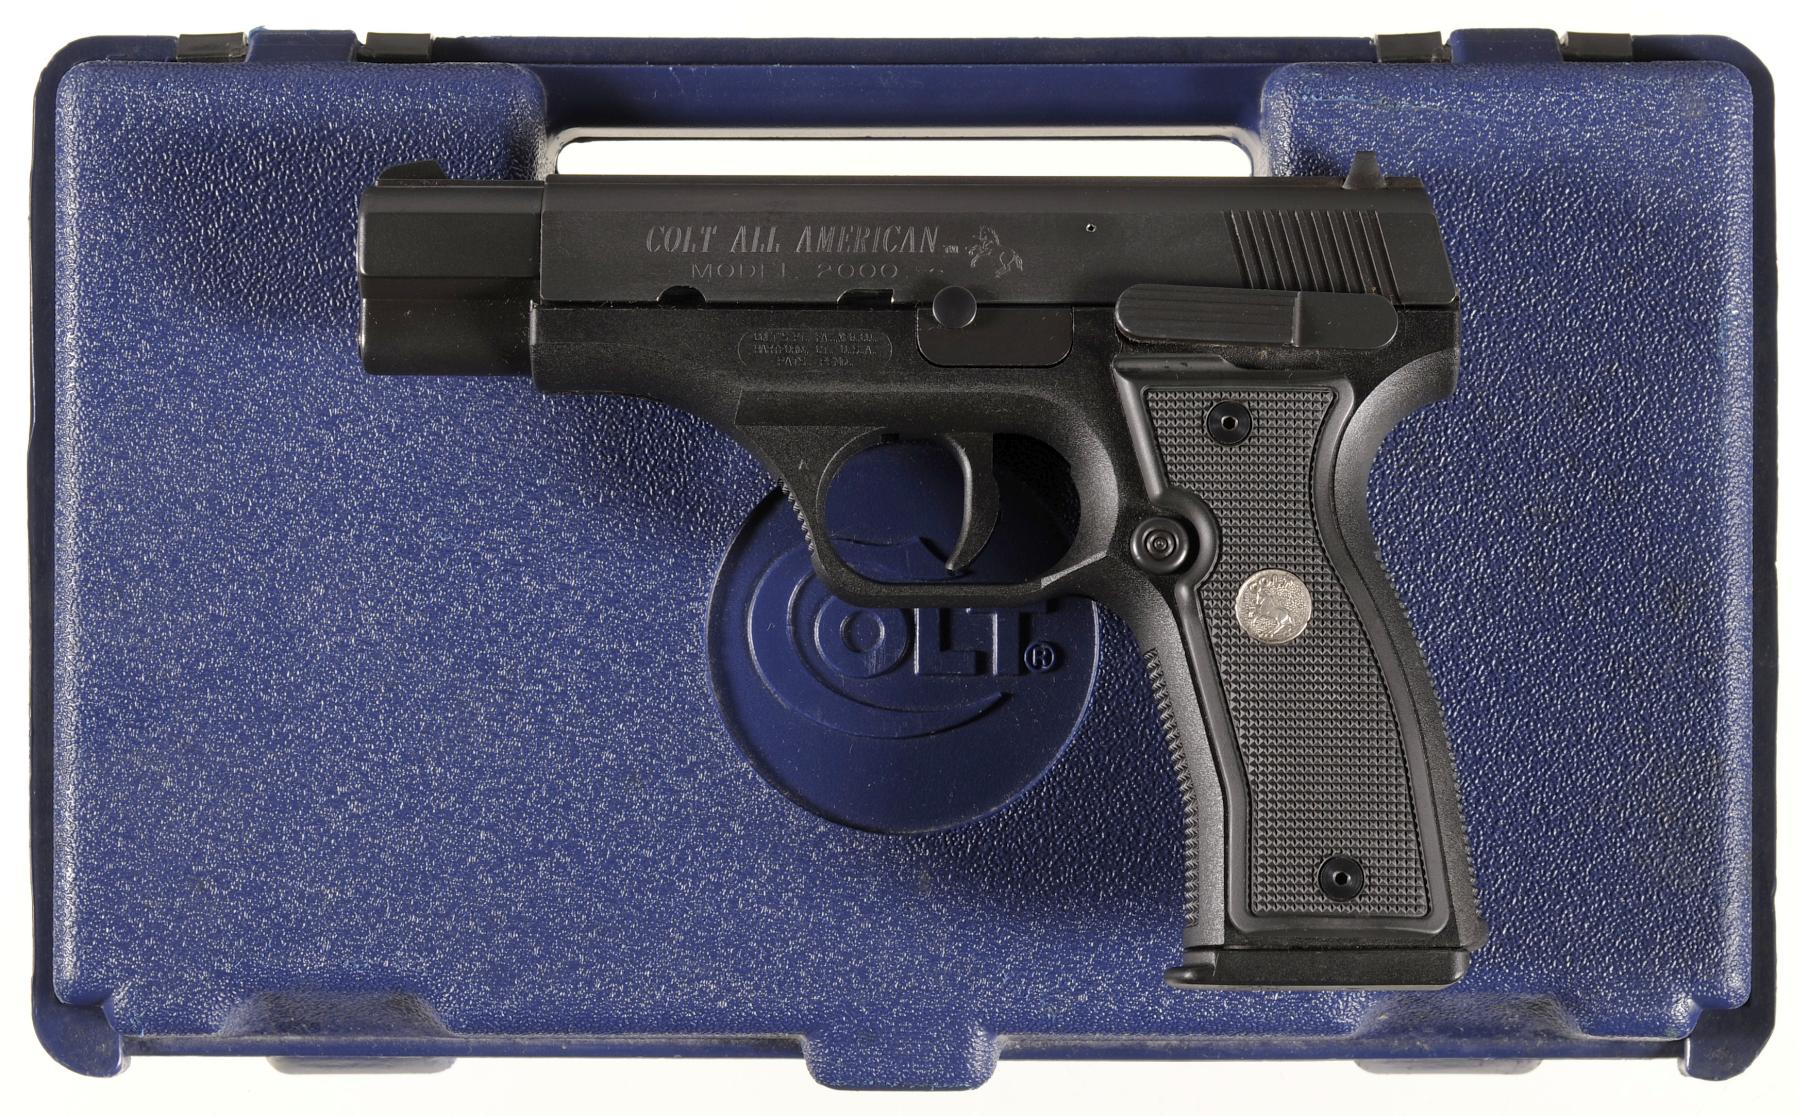 Colt All American Model 2000 Semi-Automatic Pistol with CaseIncludes an unn...